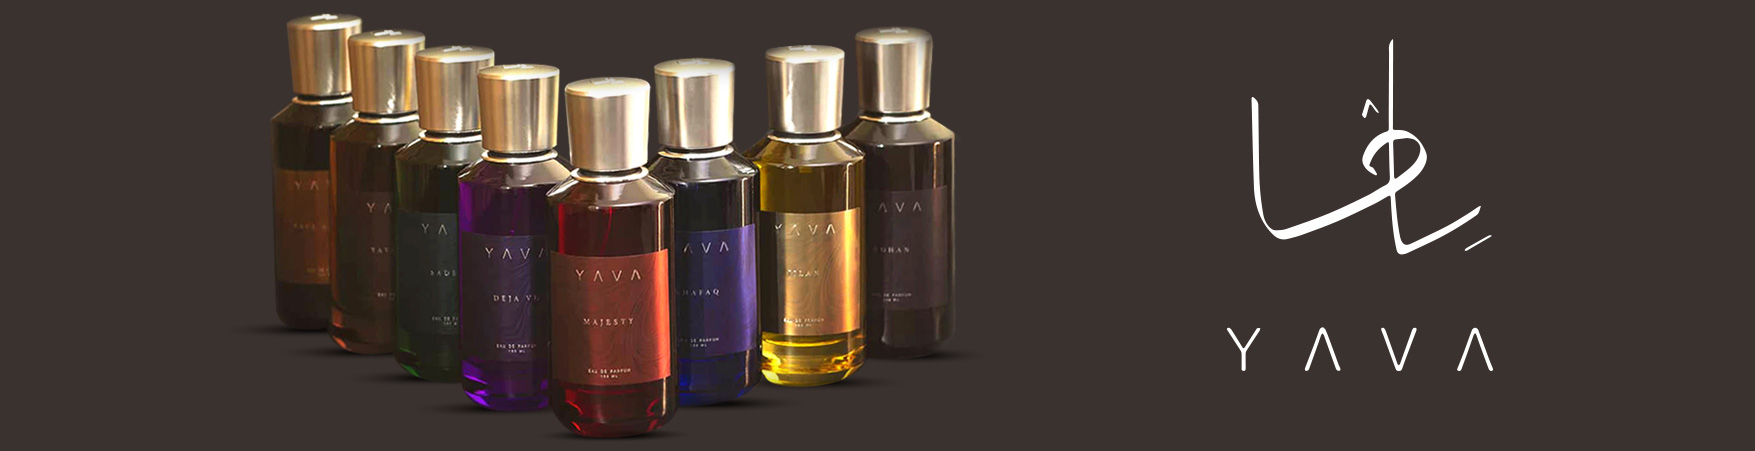 Yava Perfumes